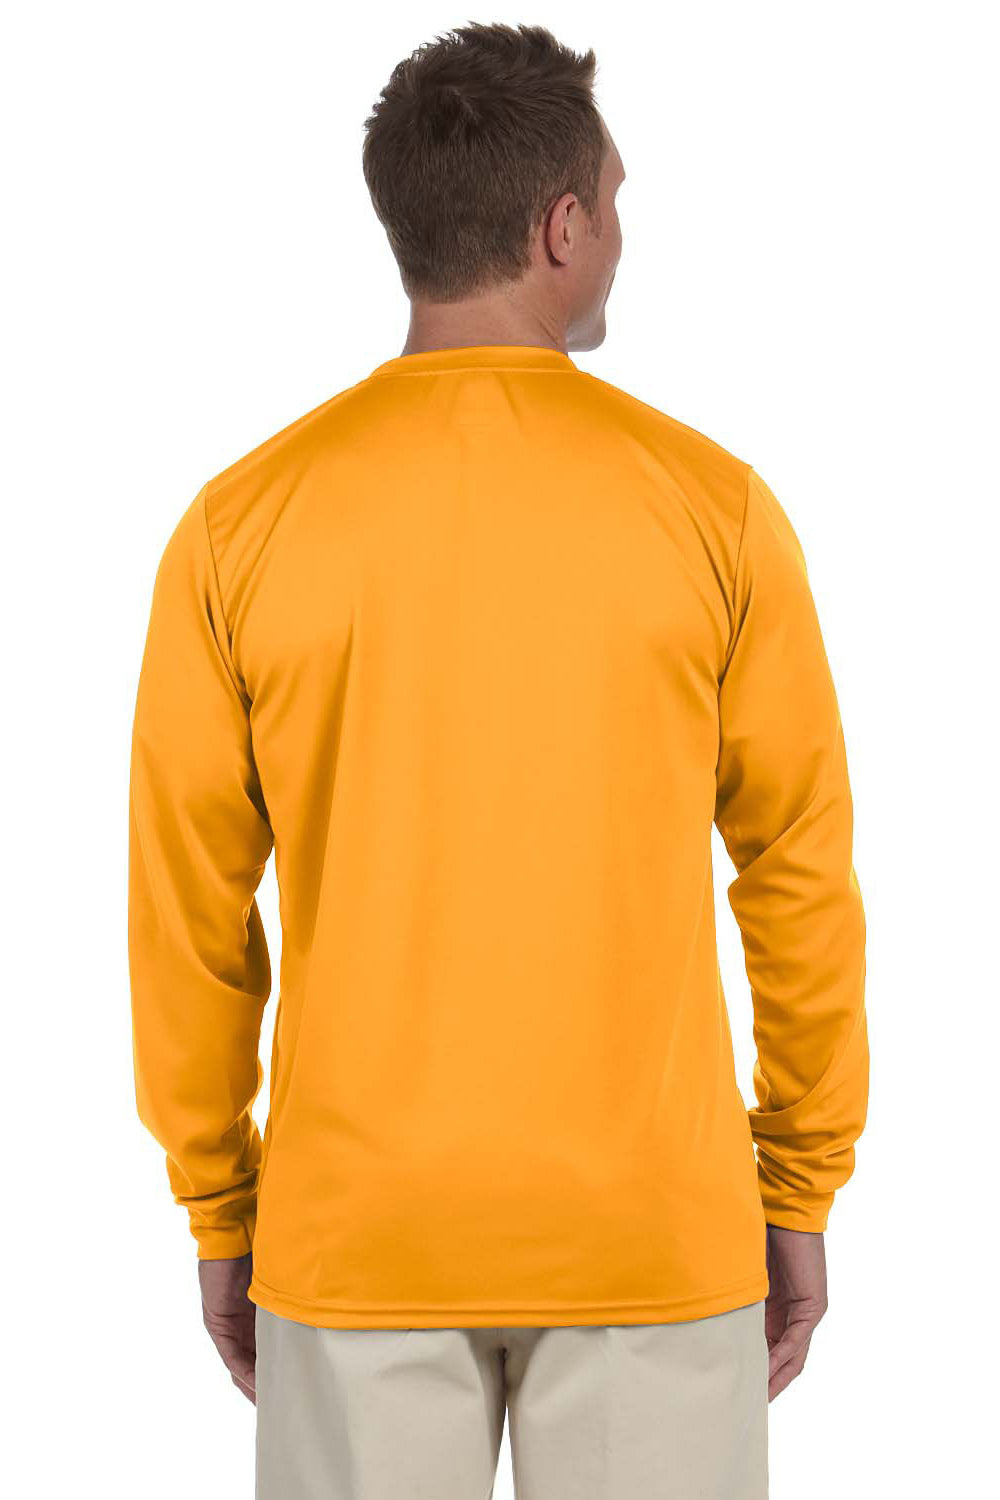 Augusta Sportswear 788 Mens Moisture Wicking Long Sleeve Crewneck T-Shirt Gold Model Back